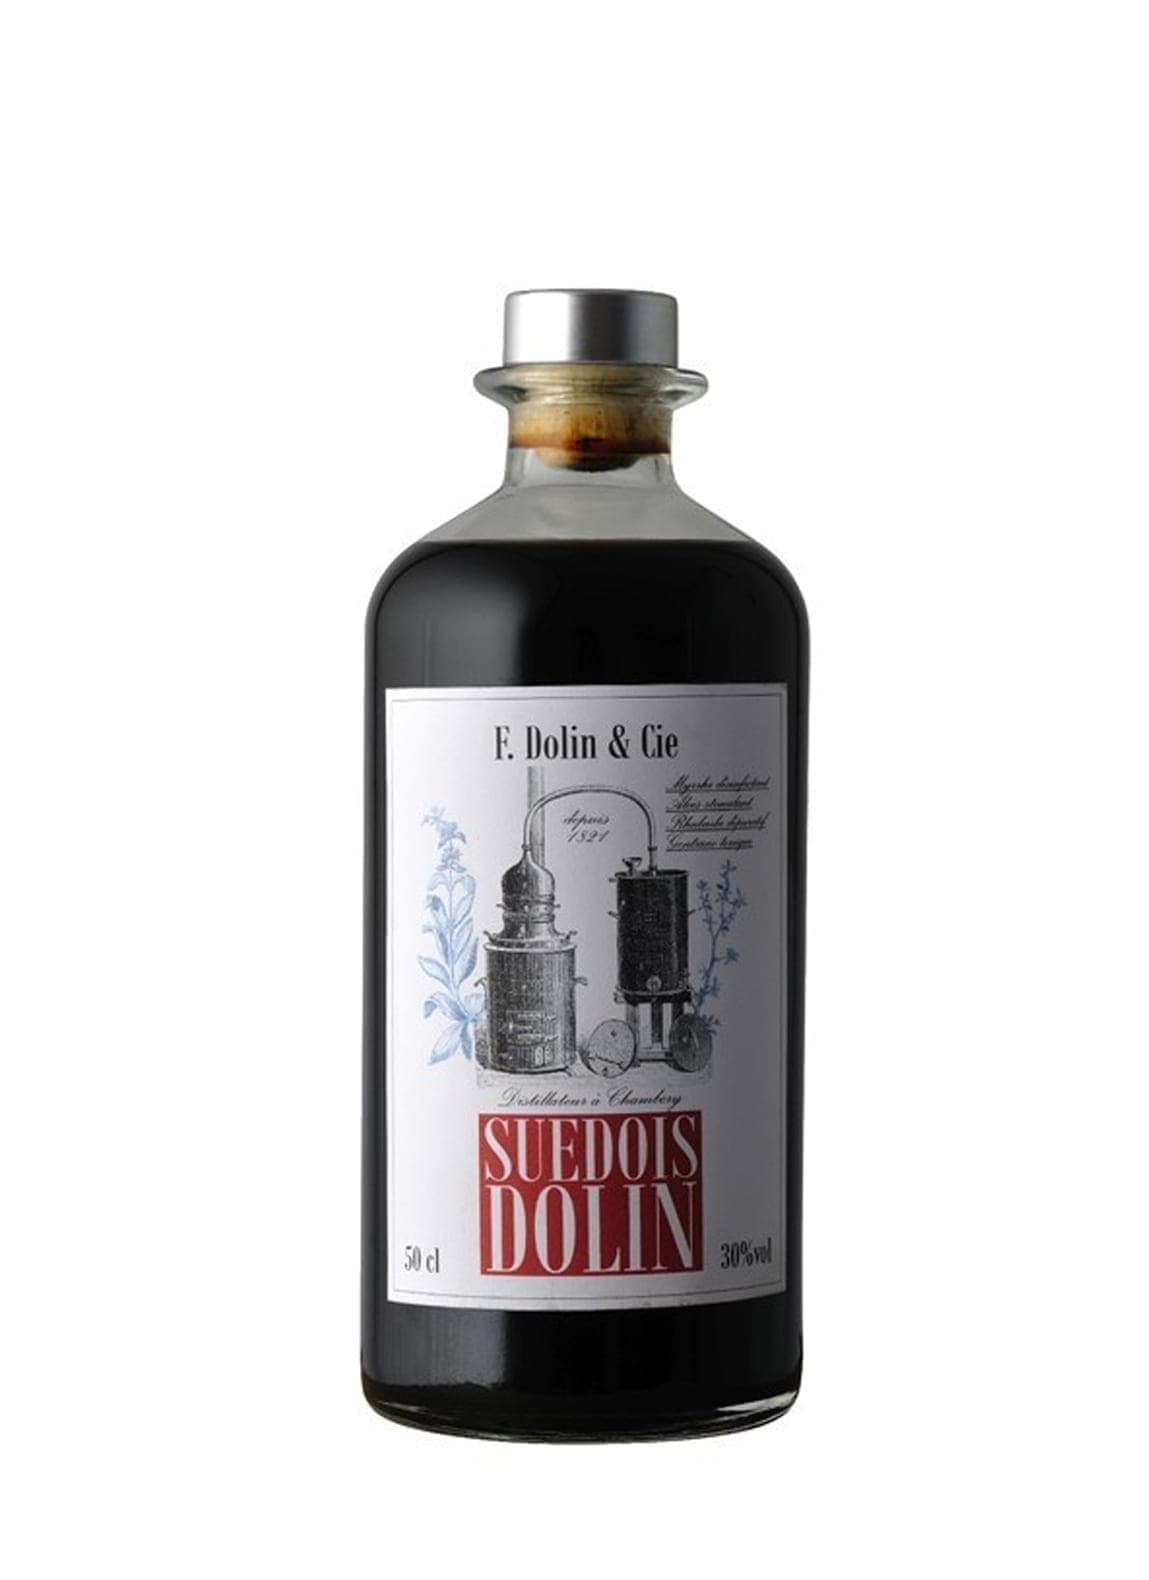 Dolin Suedois Bitter 30% 500ml | Bitters | Shop online at Spirits of France